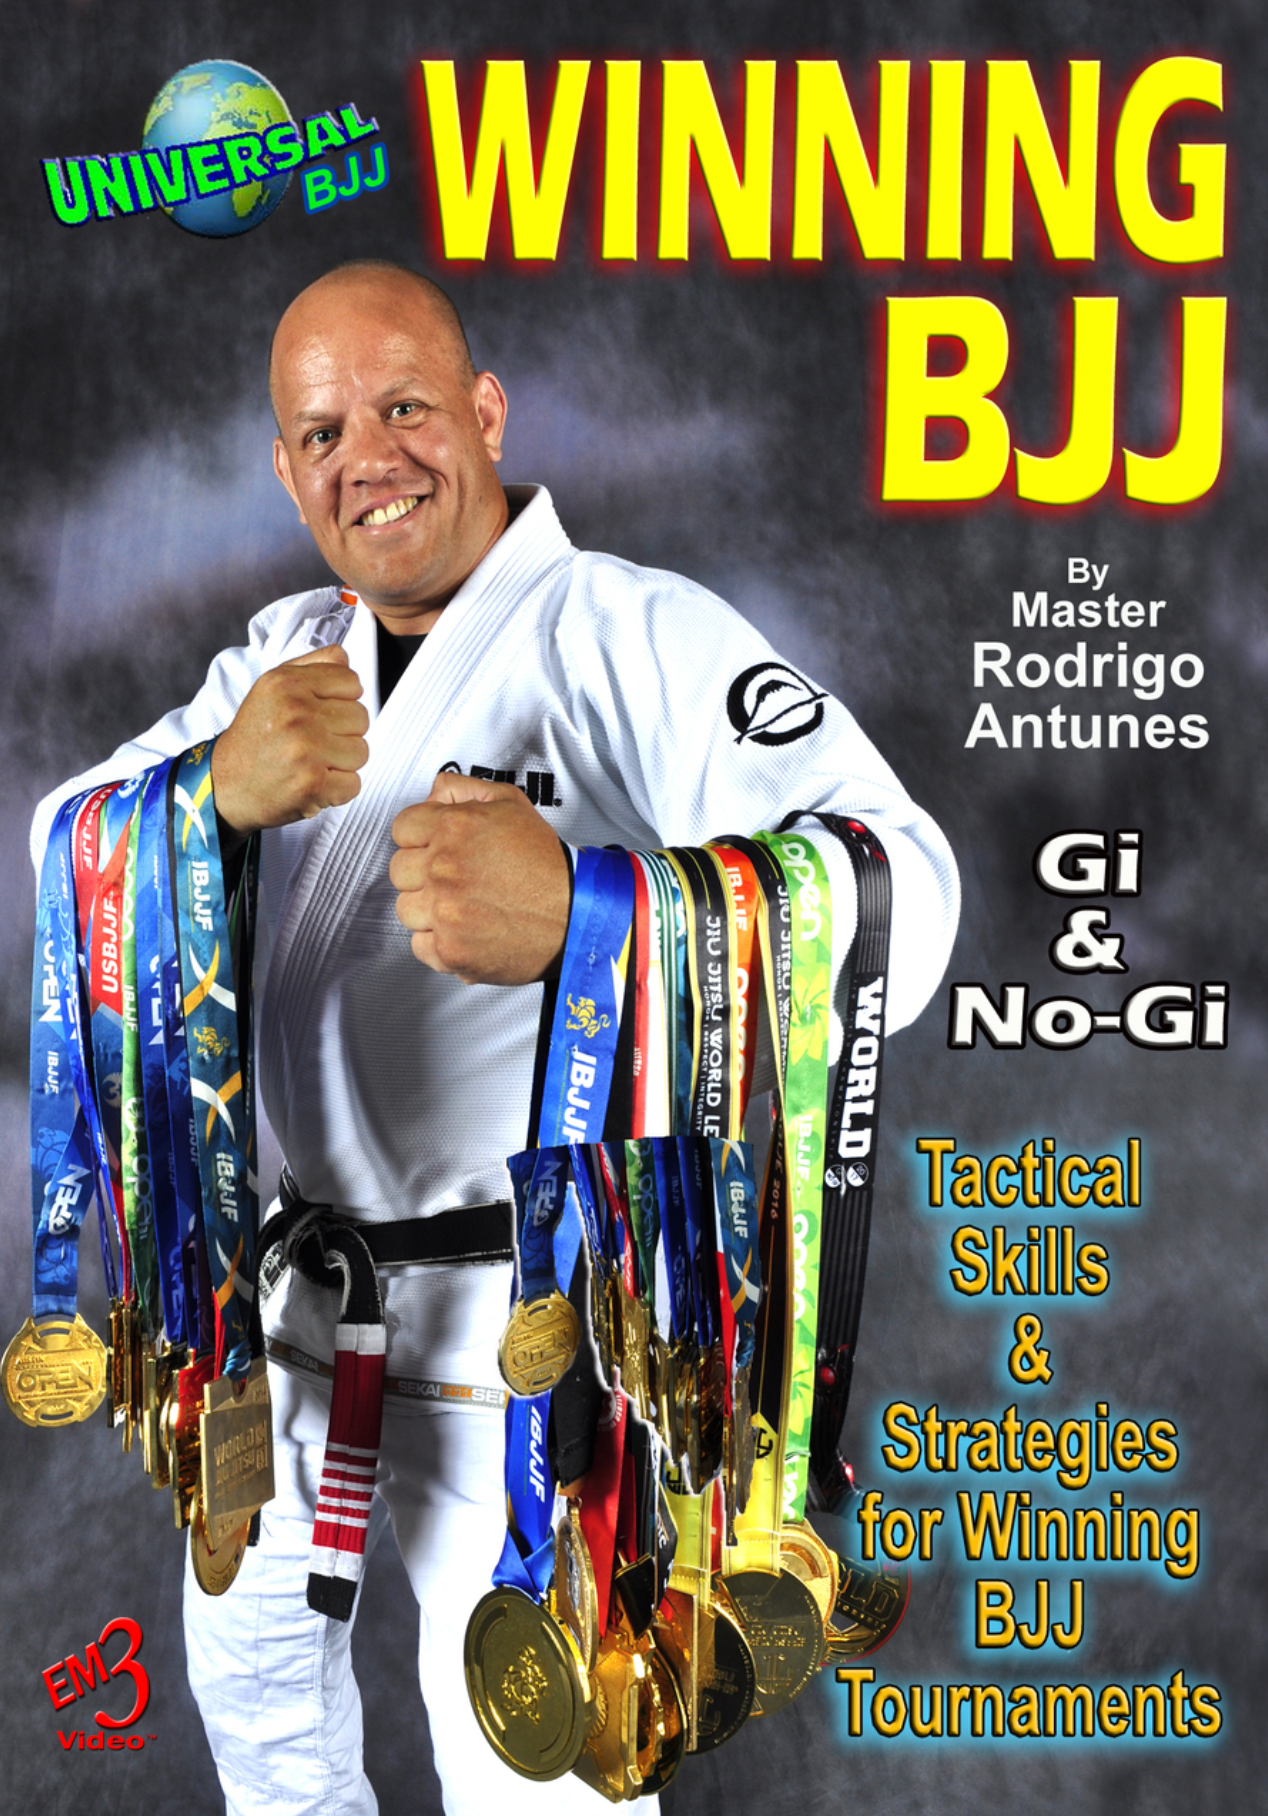 Winning BJJ: Tactical Skills & Strategies for Tournaments DVD by Rodrigo Antunes - Budovideos Inc